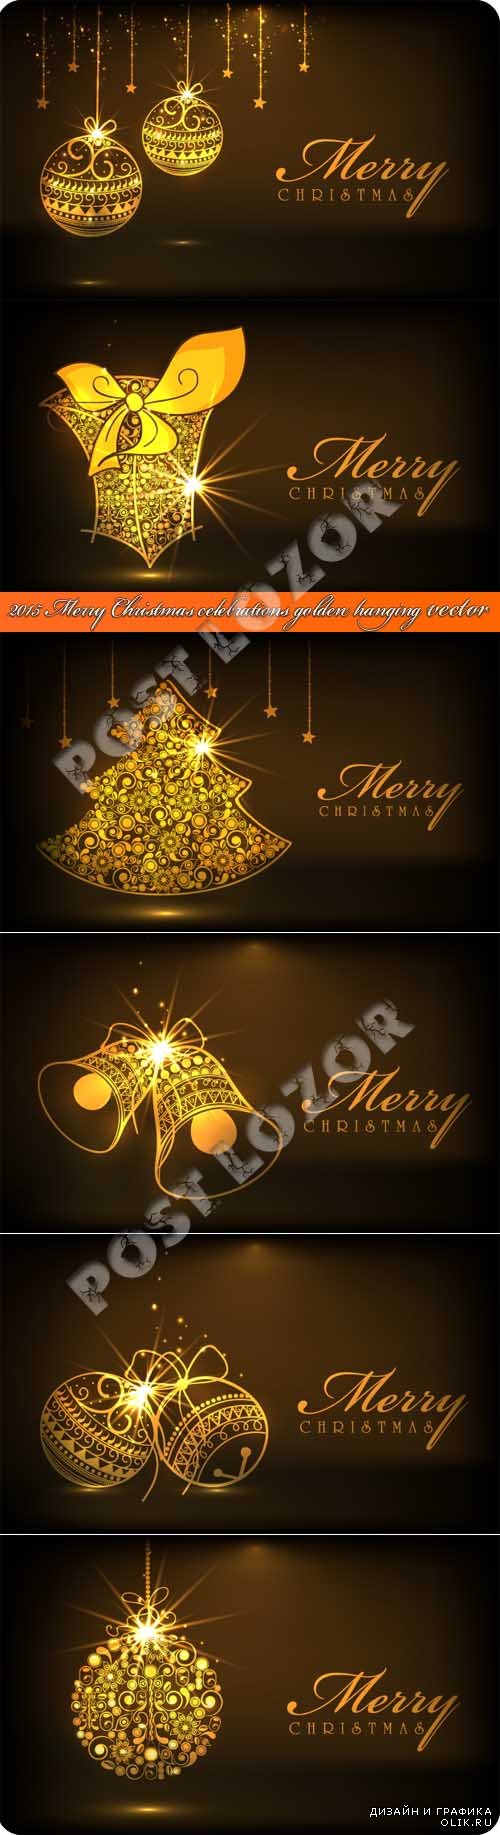 2015 Merry Christmas celebrations golden hanging vector